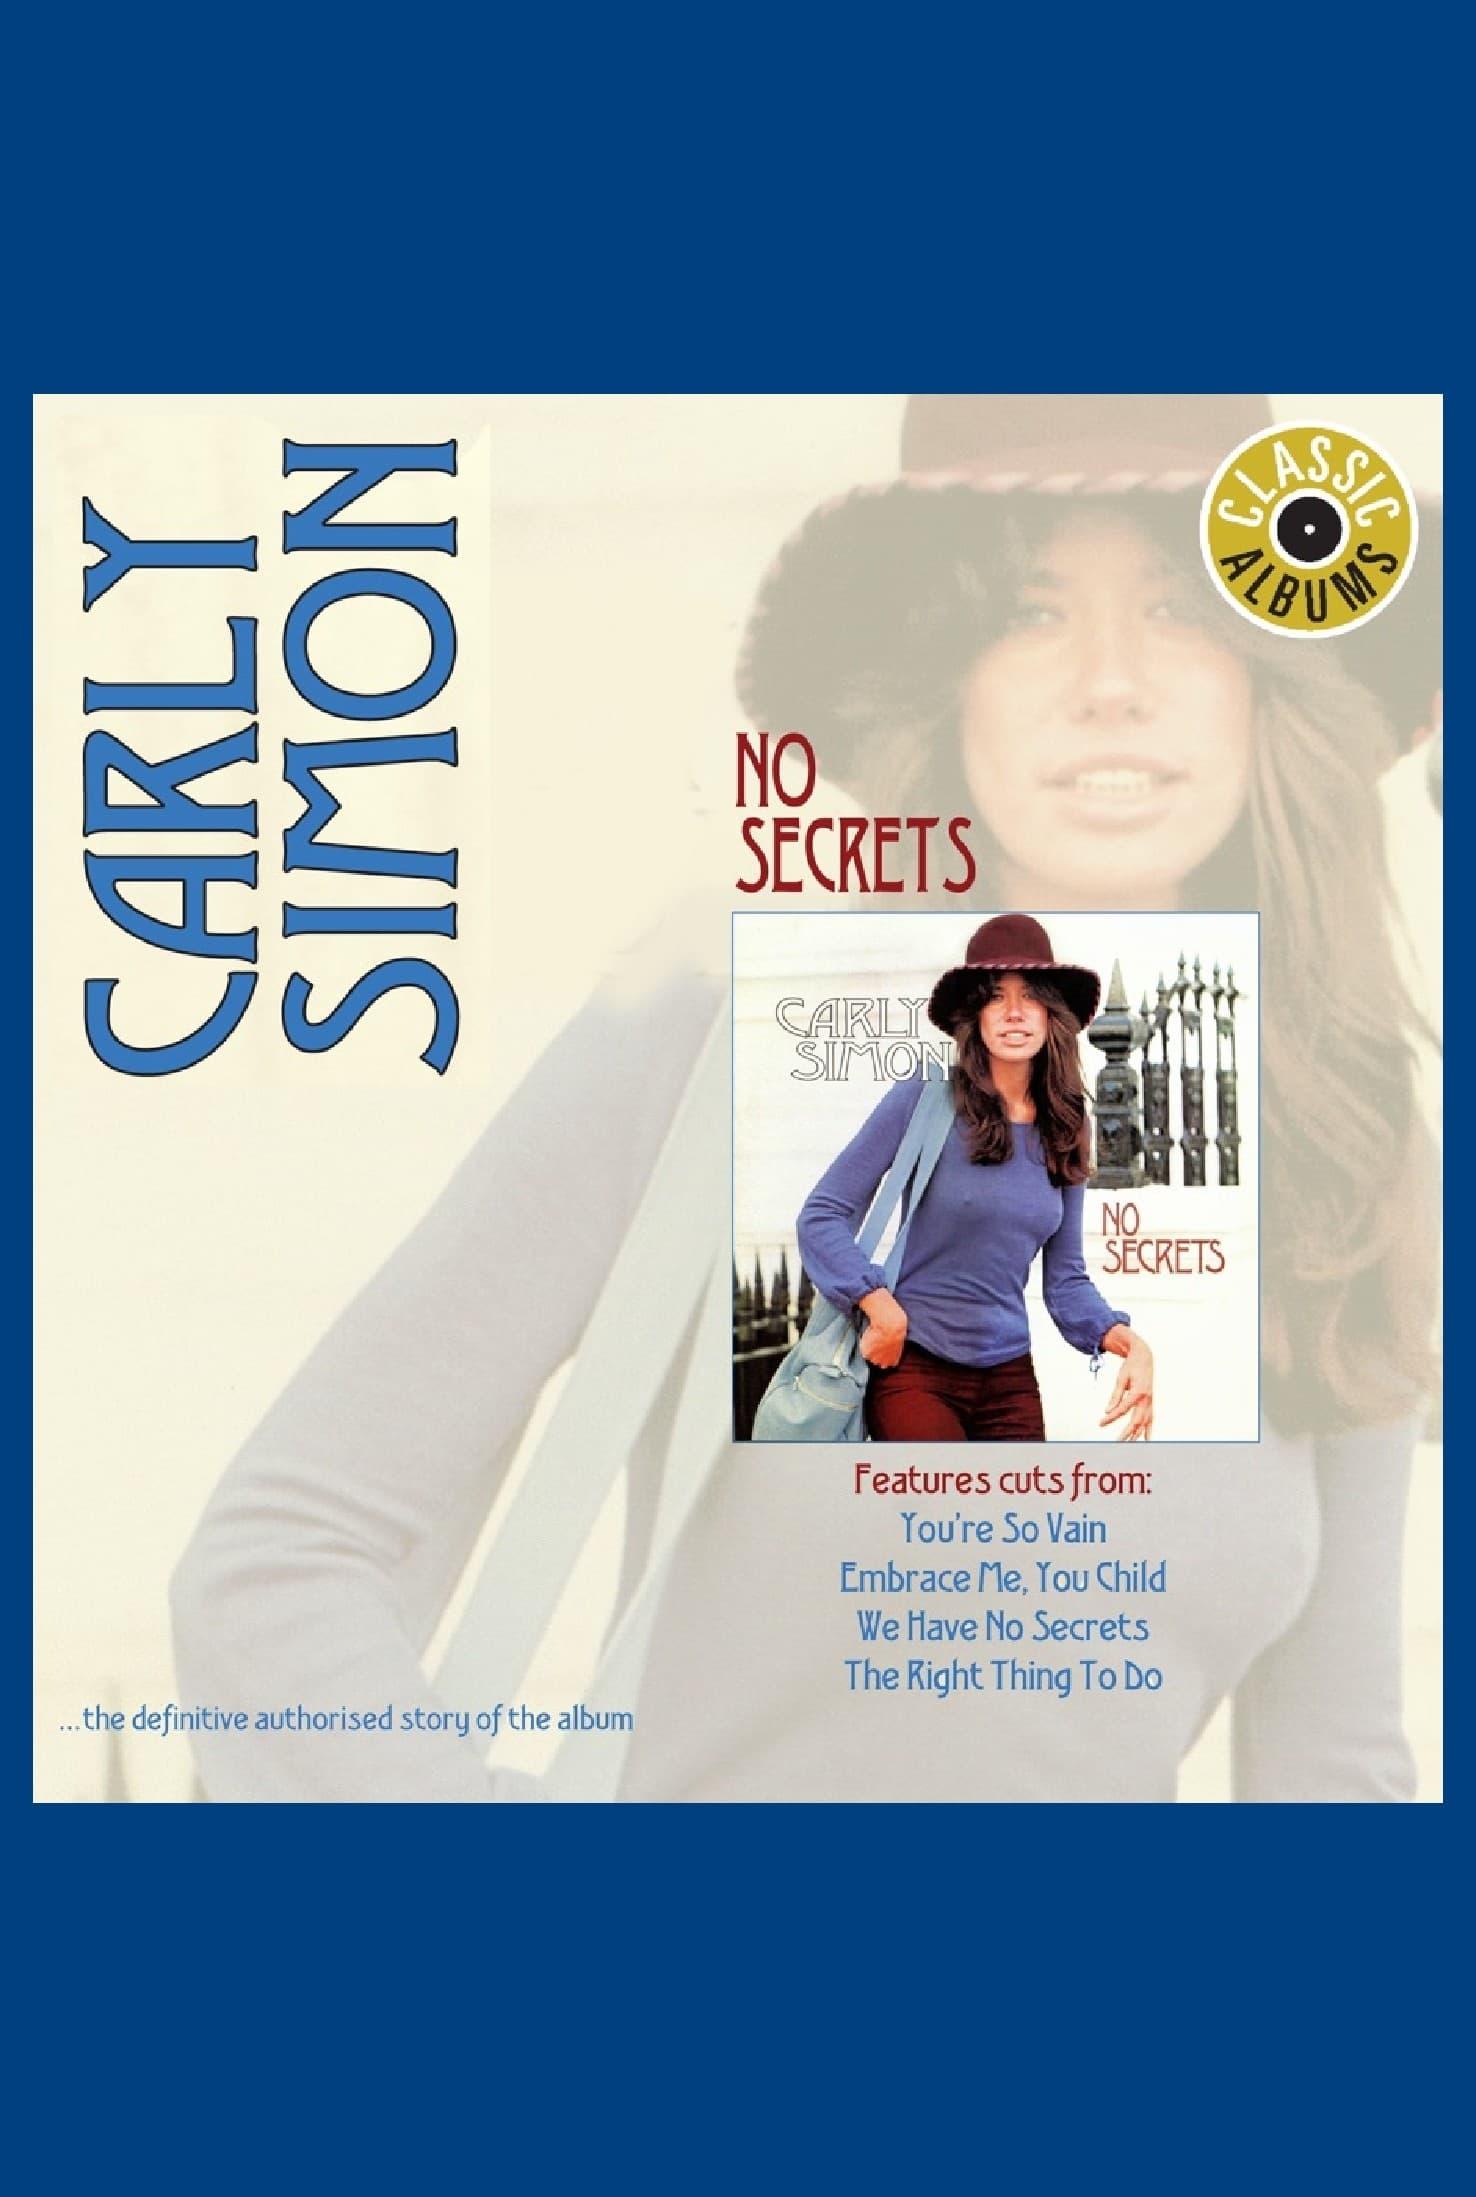 Classic Albums: Carly Simon - No Secrets poster